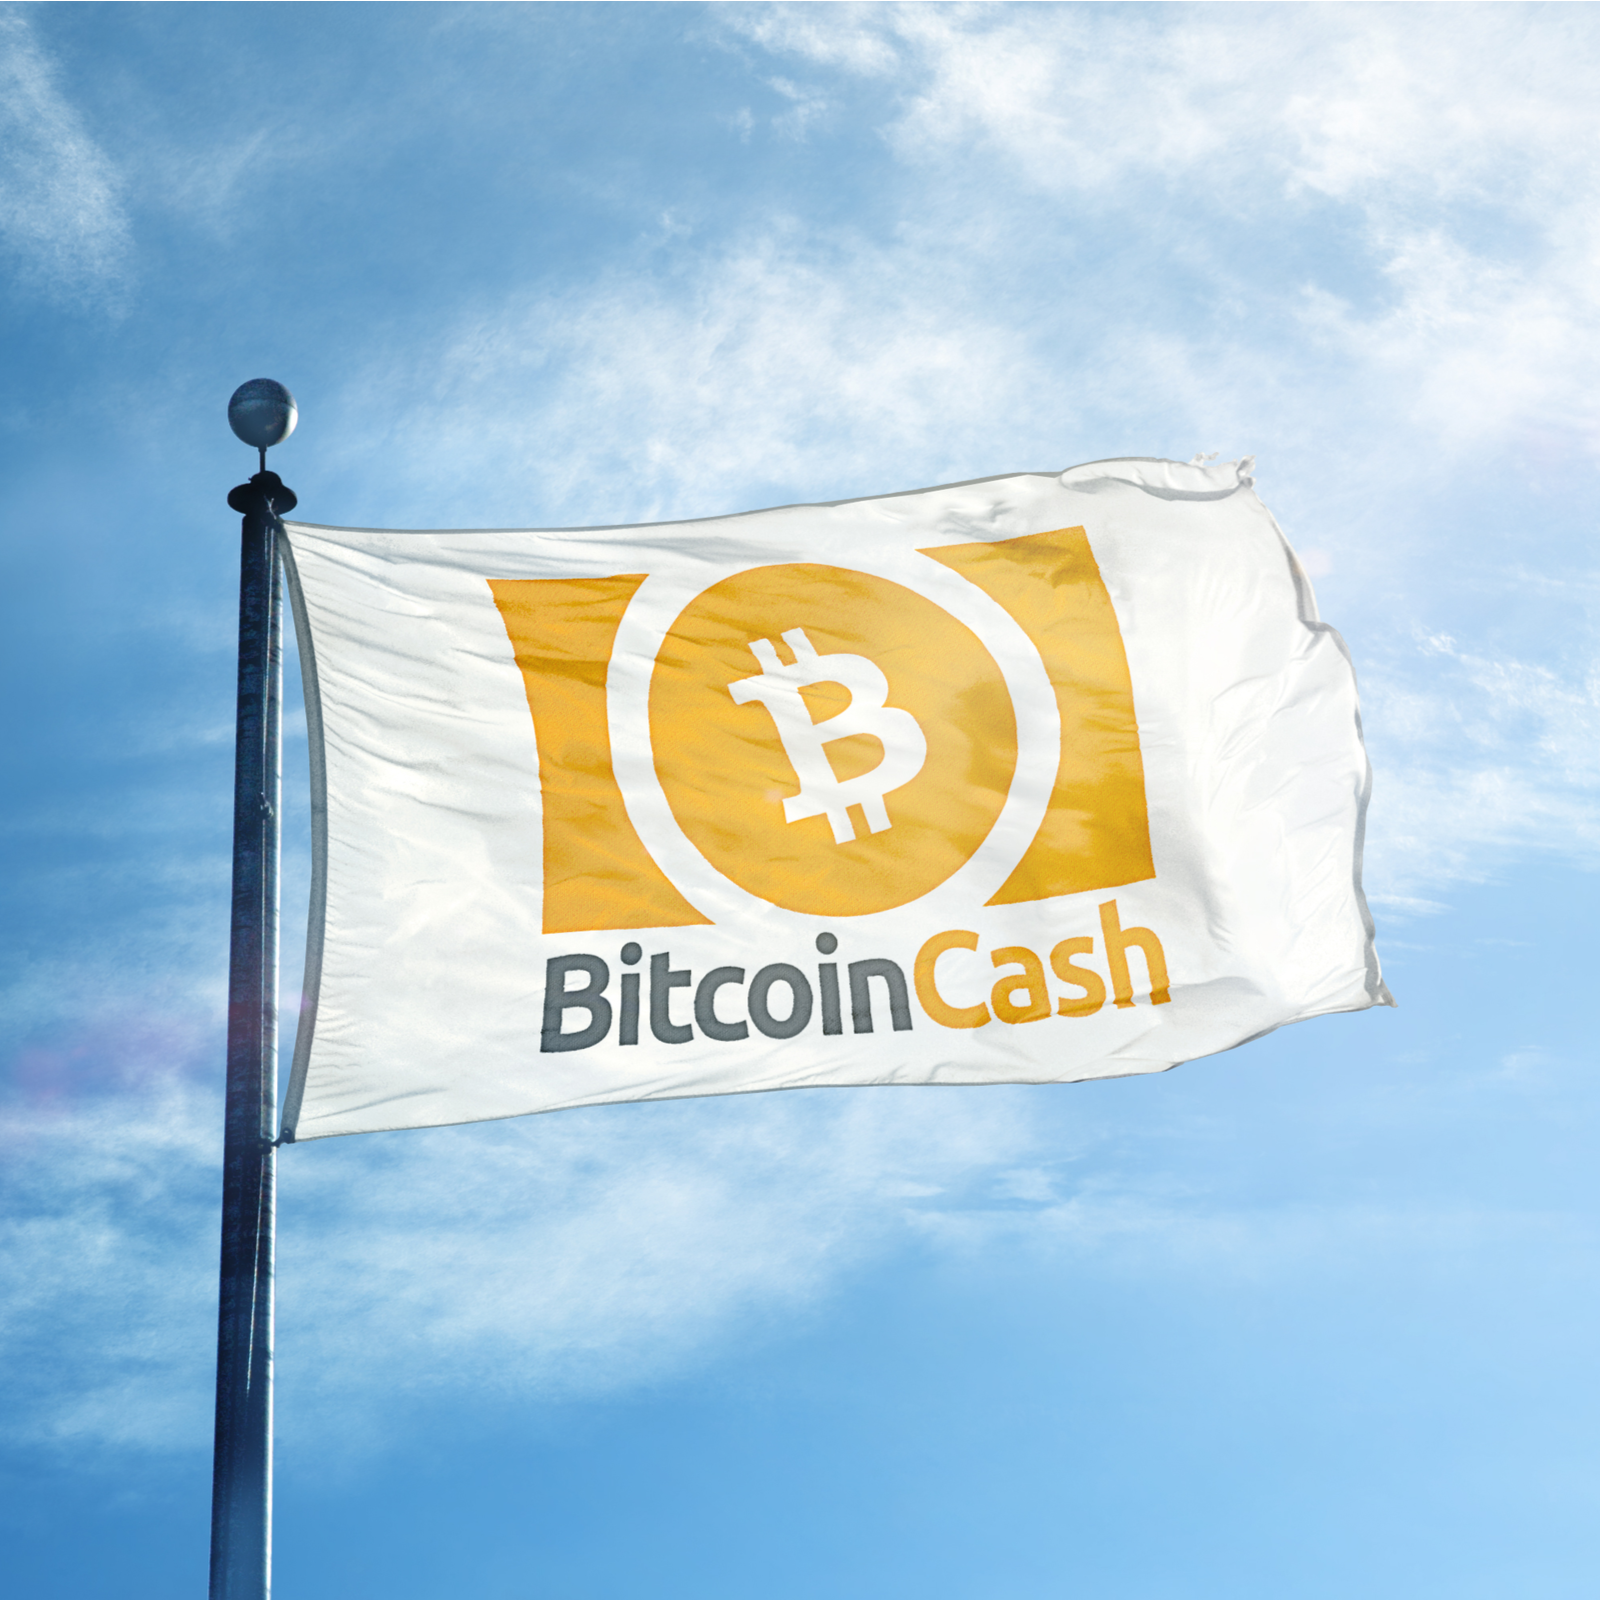 12 Reasons Bitcoin Cash is the Real Bitcoin